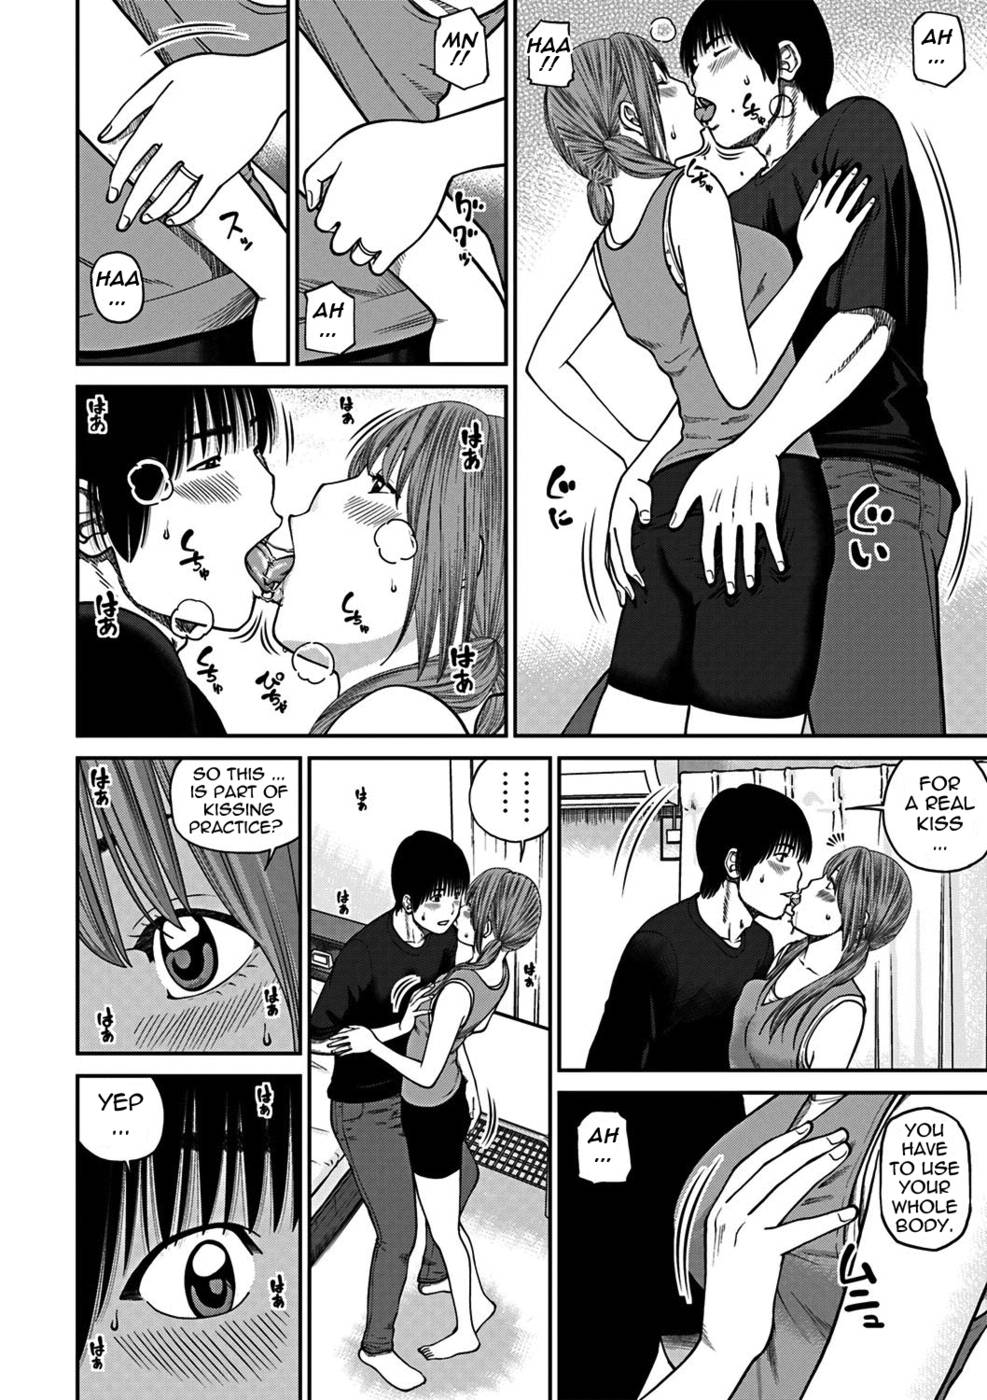 Hentai Manga Comic-33 Year Old Unsatisfied Wife-Chapter 1-Kiss Training-11